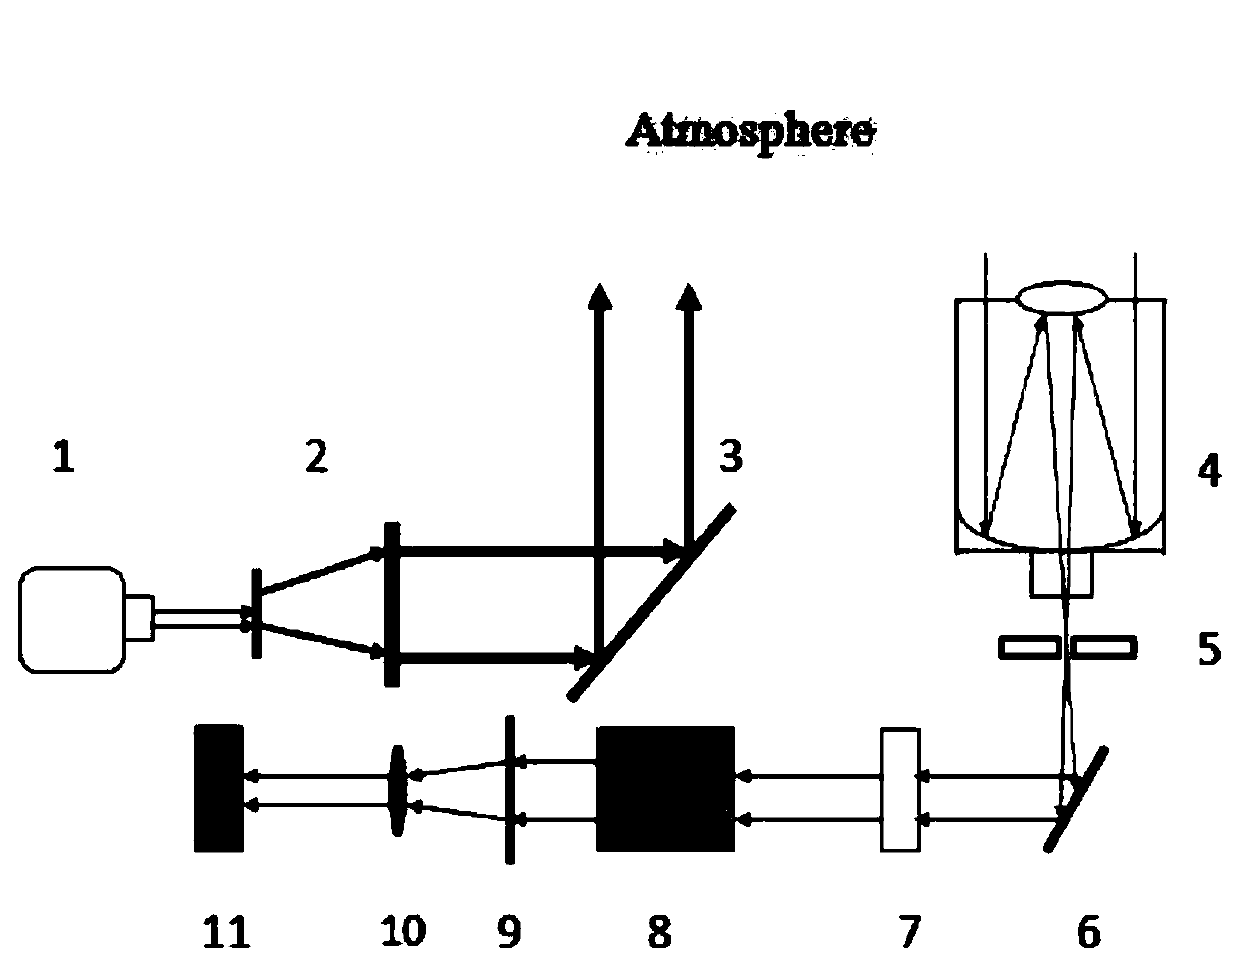 Method and system for measuring atmospheric temperature based on Doppler broadening